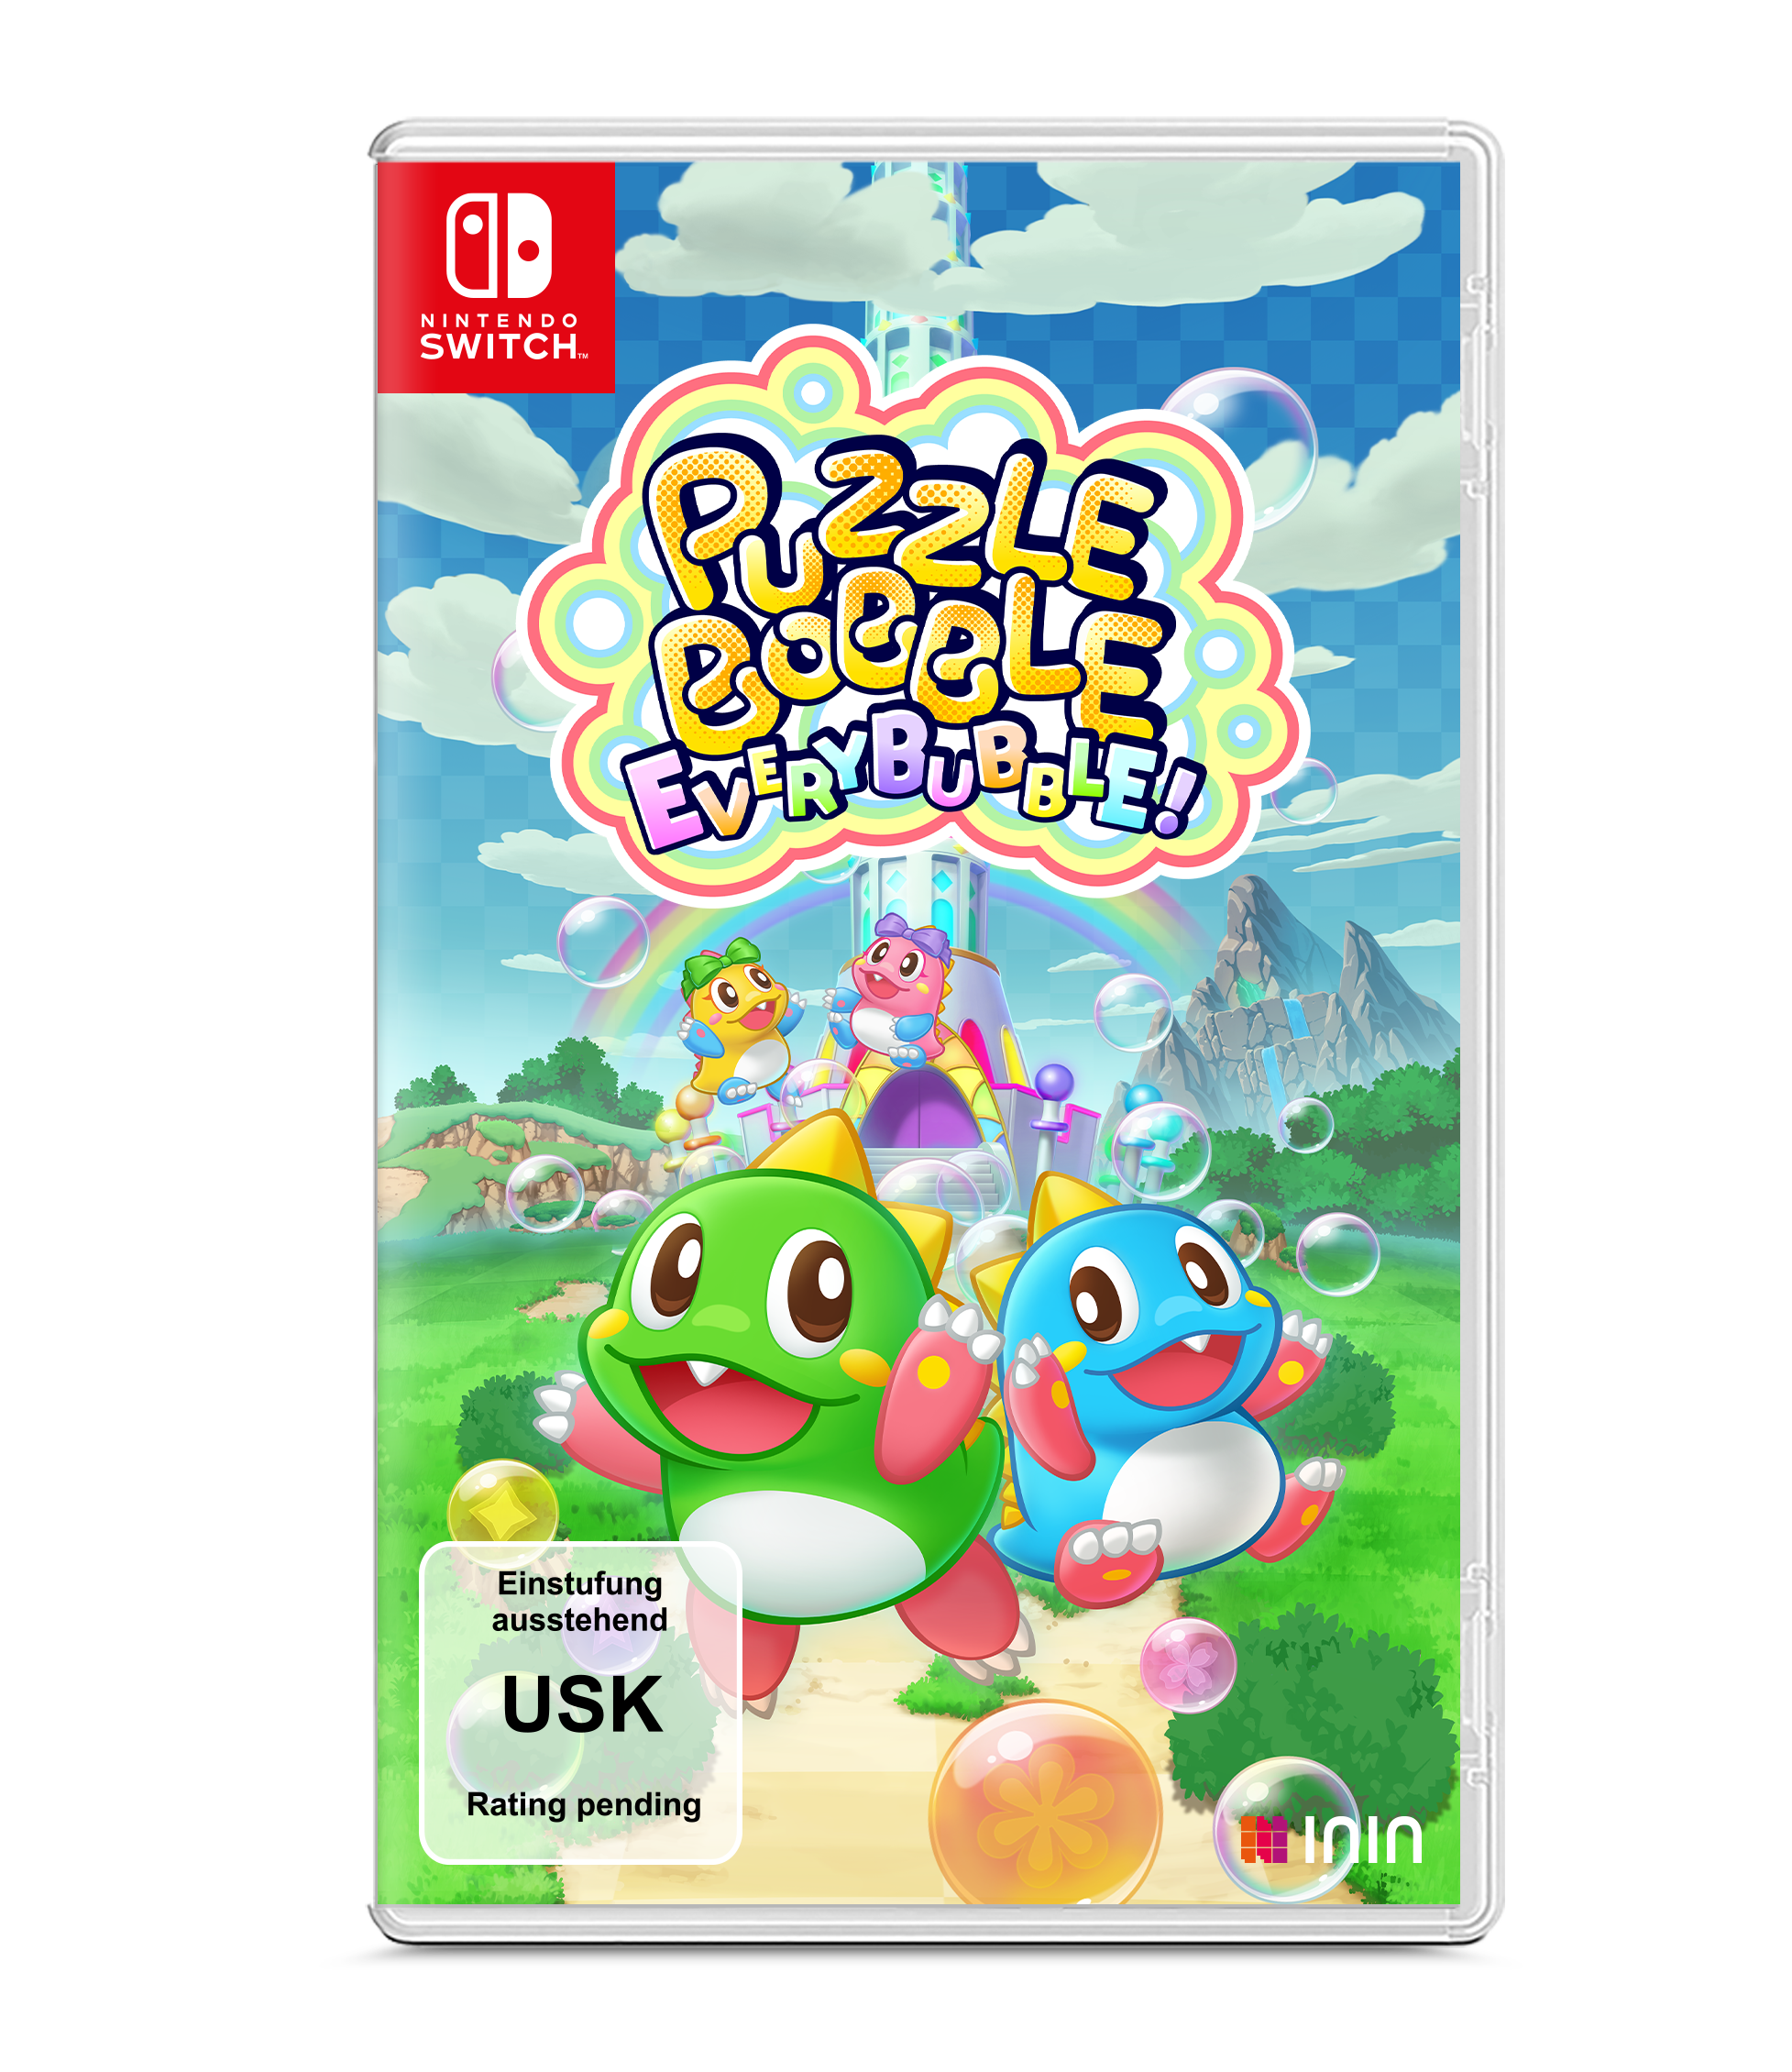 Everybubble! Switch] Bobble - Puzzle [Nintendo